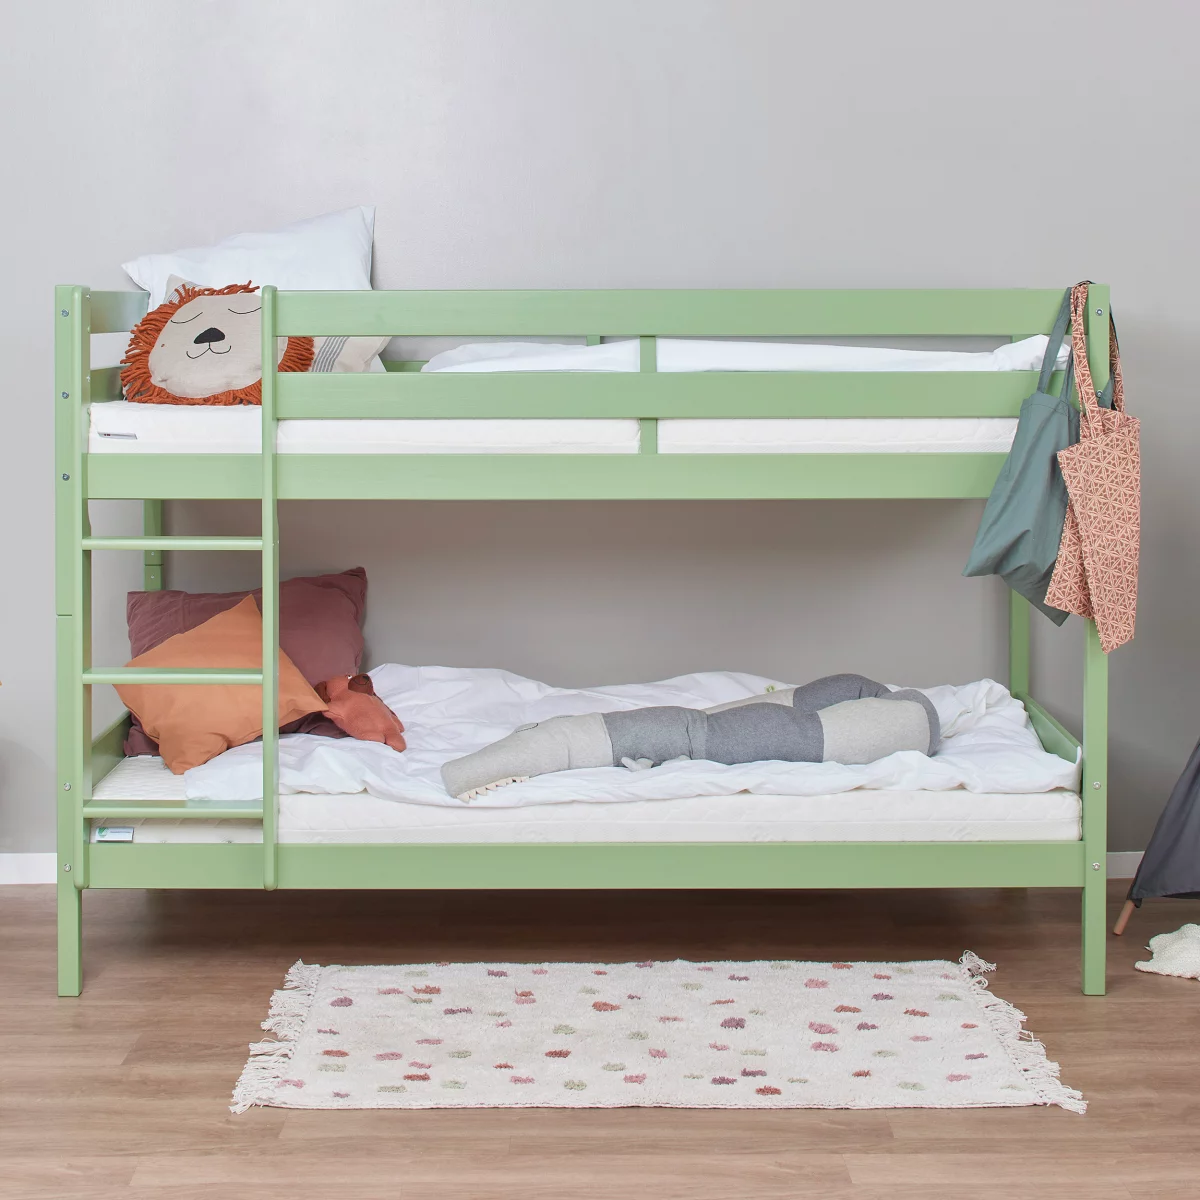 kids-beds-bed-types-bunk-beds-eco-comfort-bunk-bed-90x200-cm-pale-green_3.webp